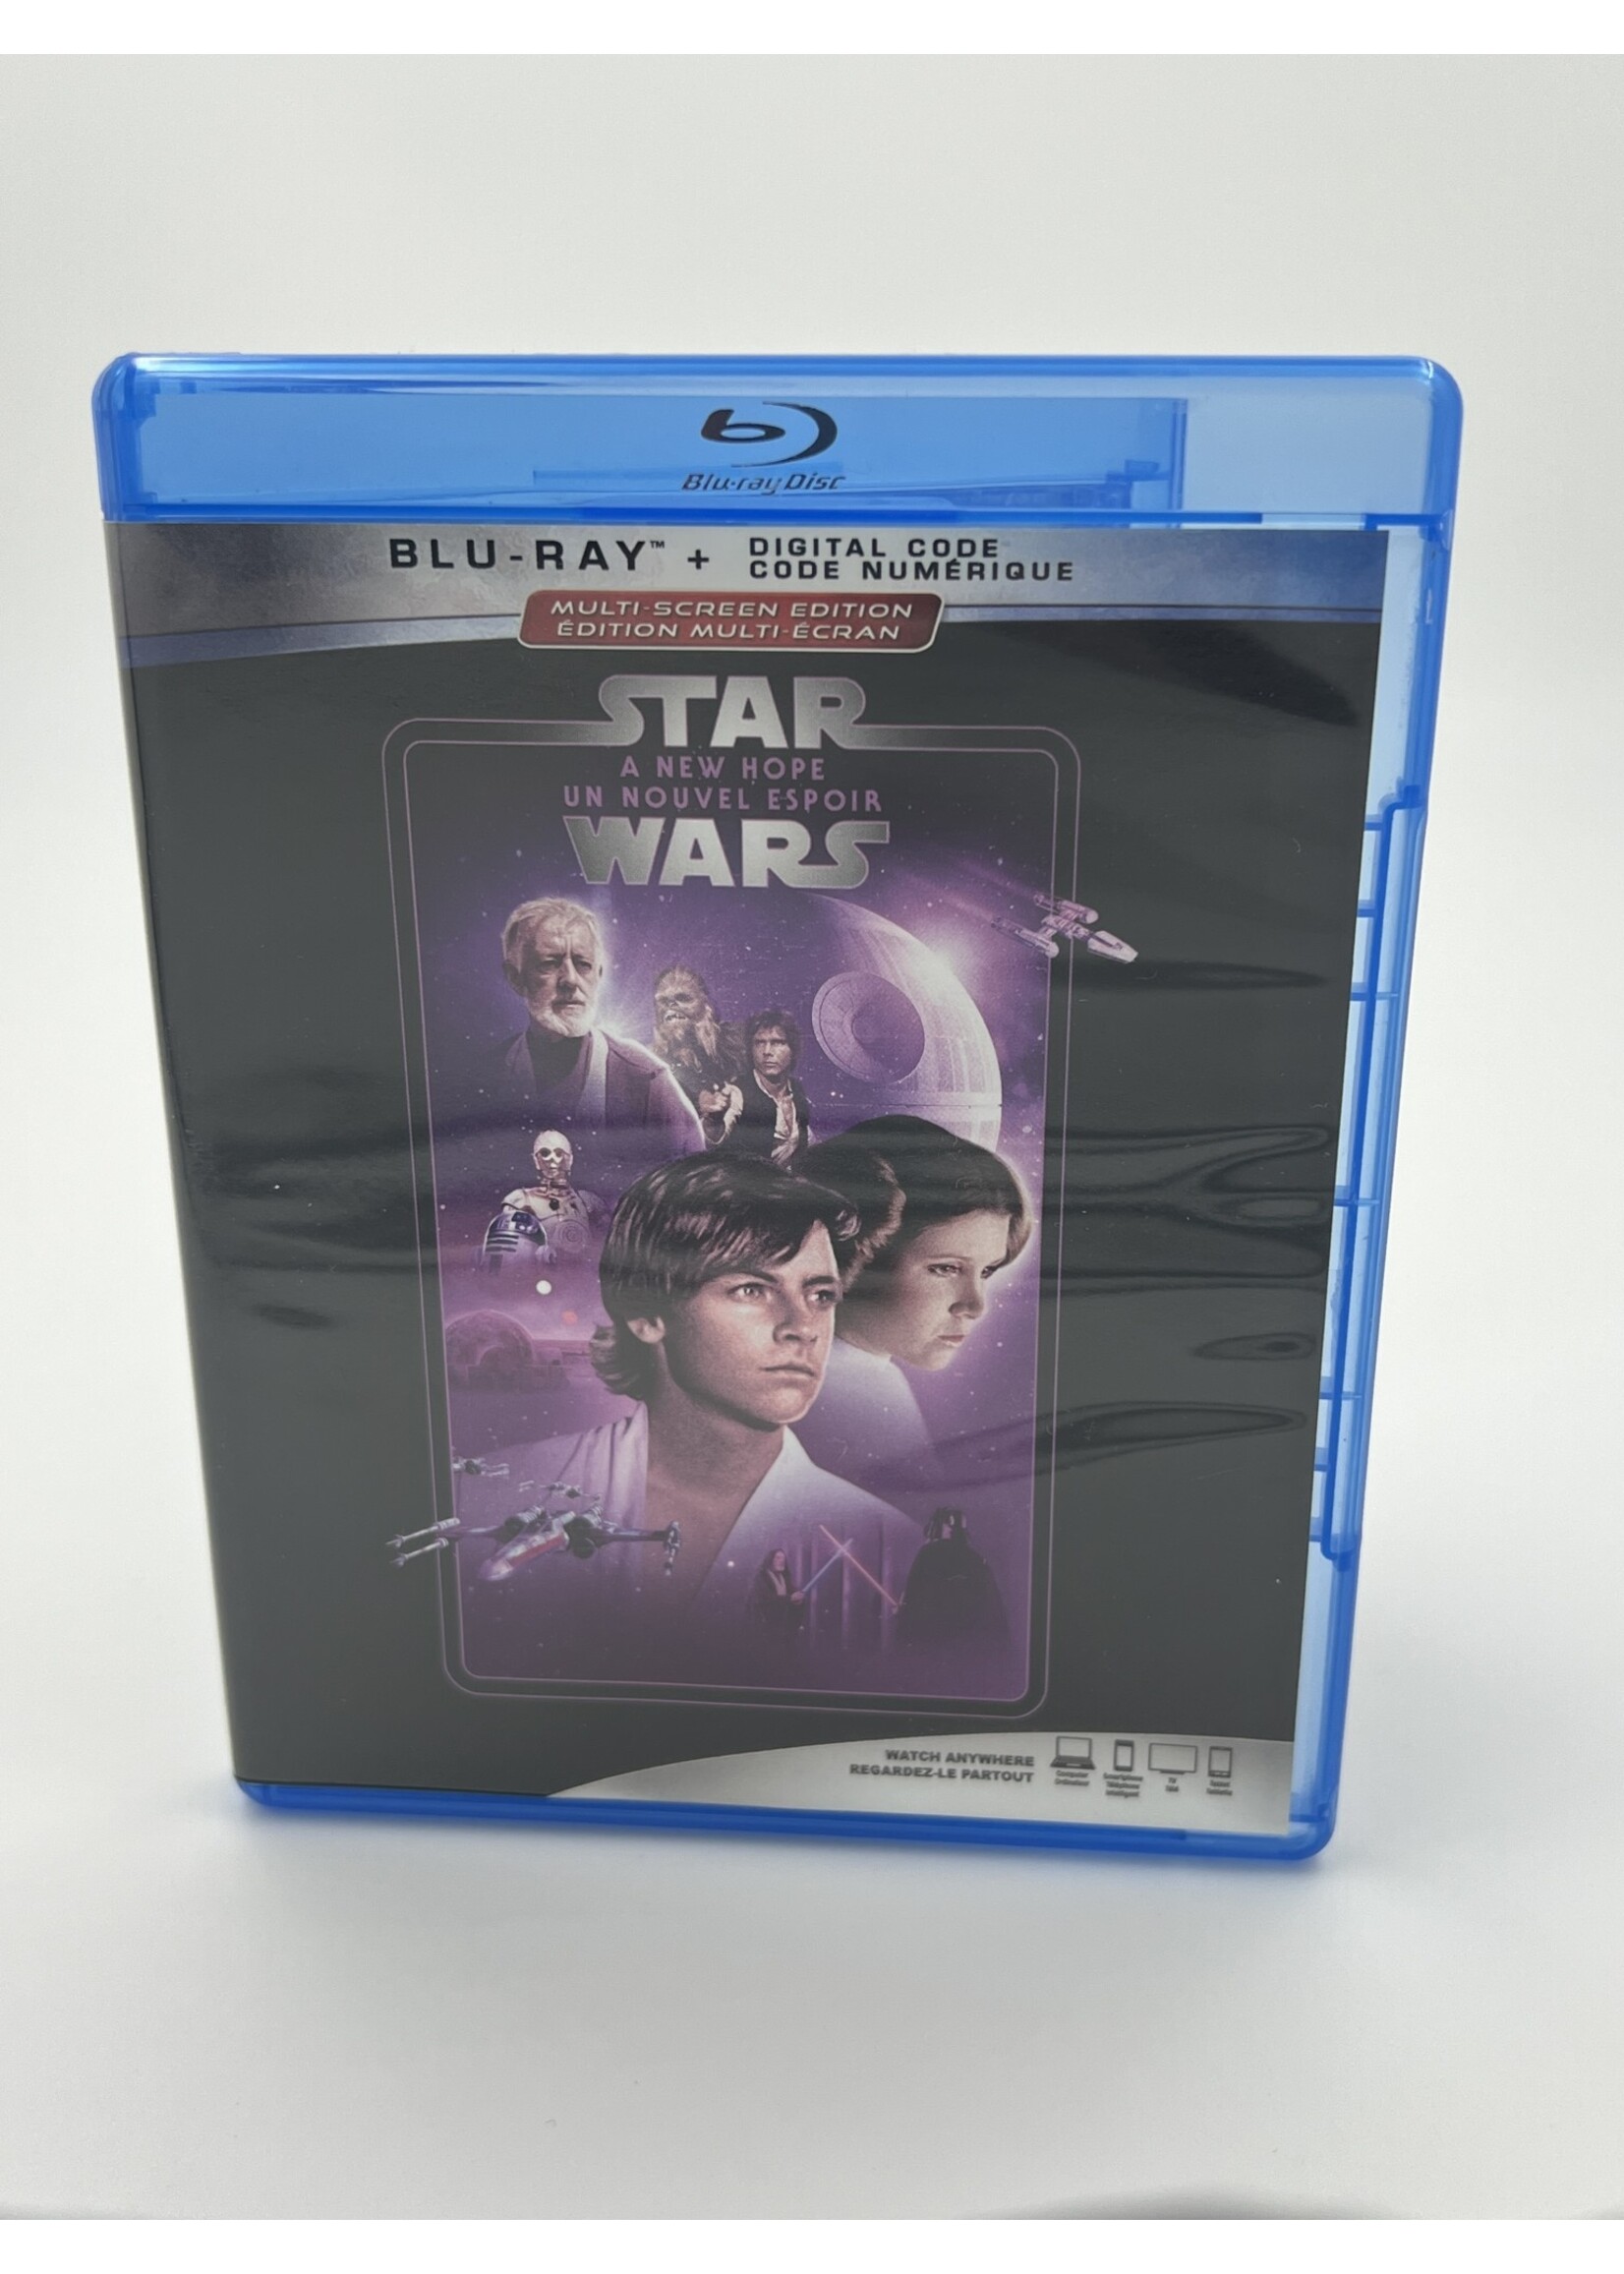 Bluray   Star Wars A New Hope Multi Screen Edition Bluray